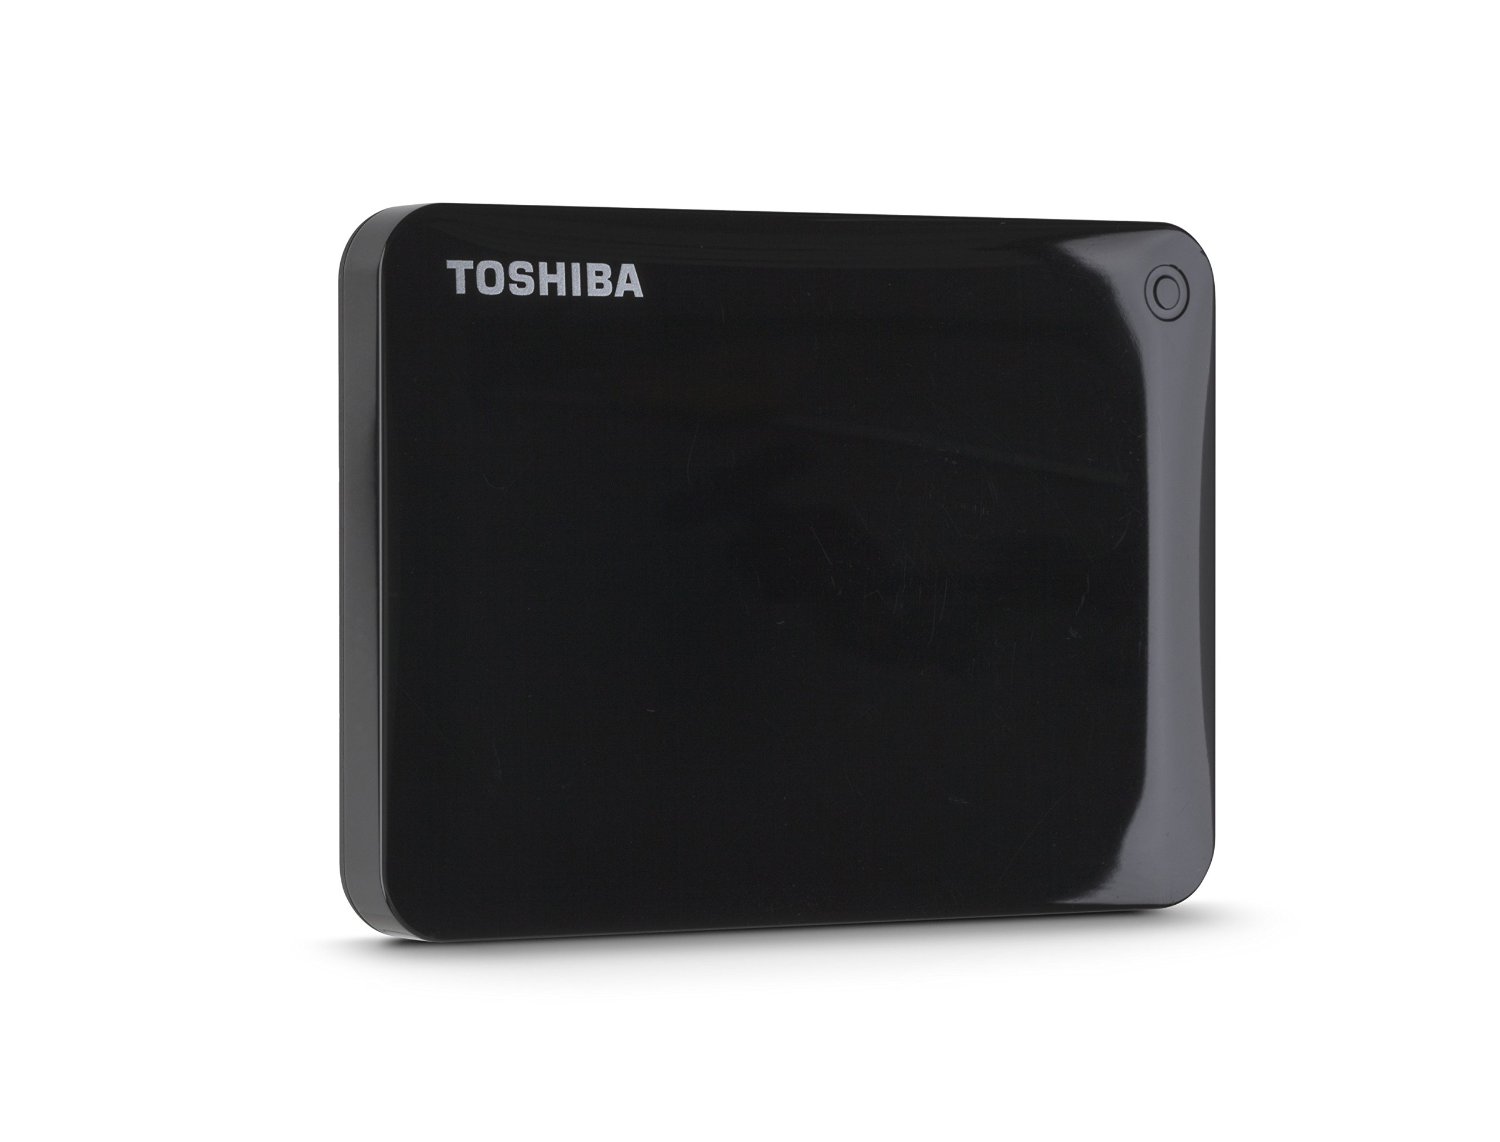 Toshiba Canvio Connect II - Hard drive - 1 TB - external (portable) - USB 3.0 - 5400 rpm - buffer: 8 MB - black - with 10GB free Cloud Backup (30 days) - for KIRA 10; Port Z20, Z30; Satellite L55; Satellite Fusion 15; Tecra C40, C50, Z40, Z50 - image 4 of 6